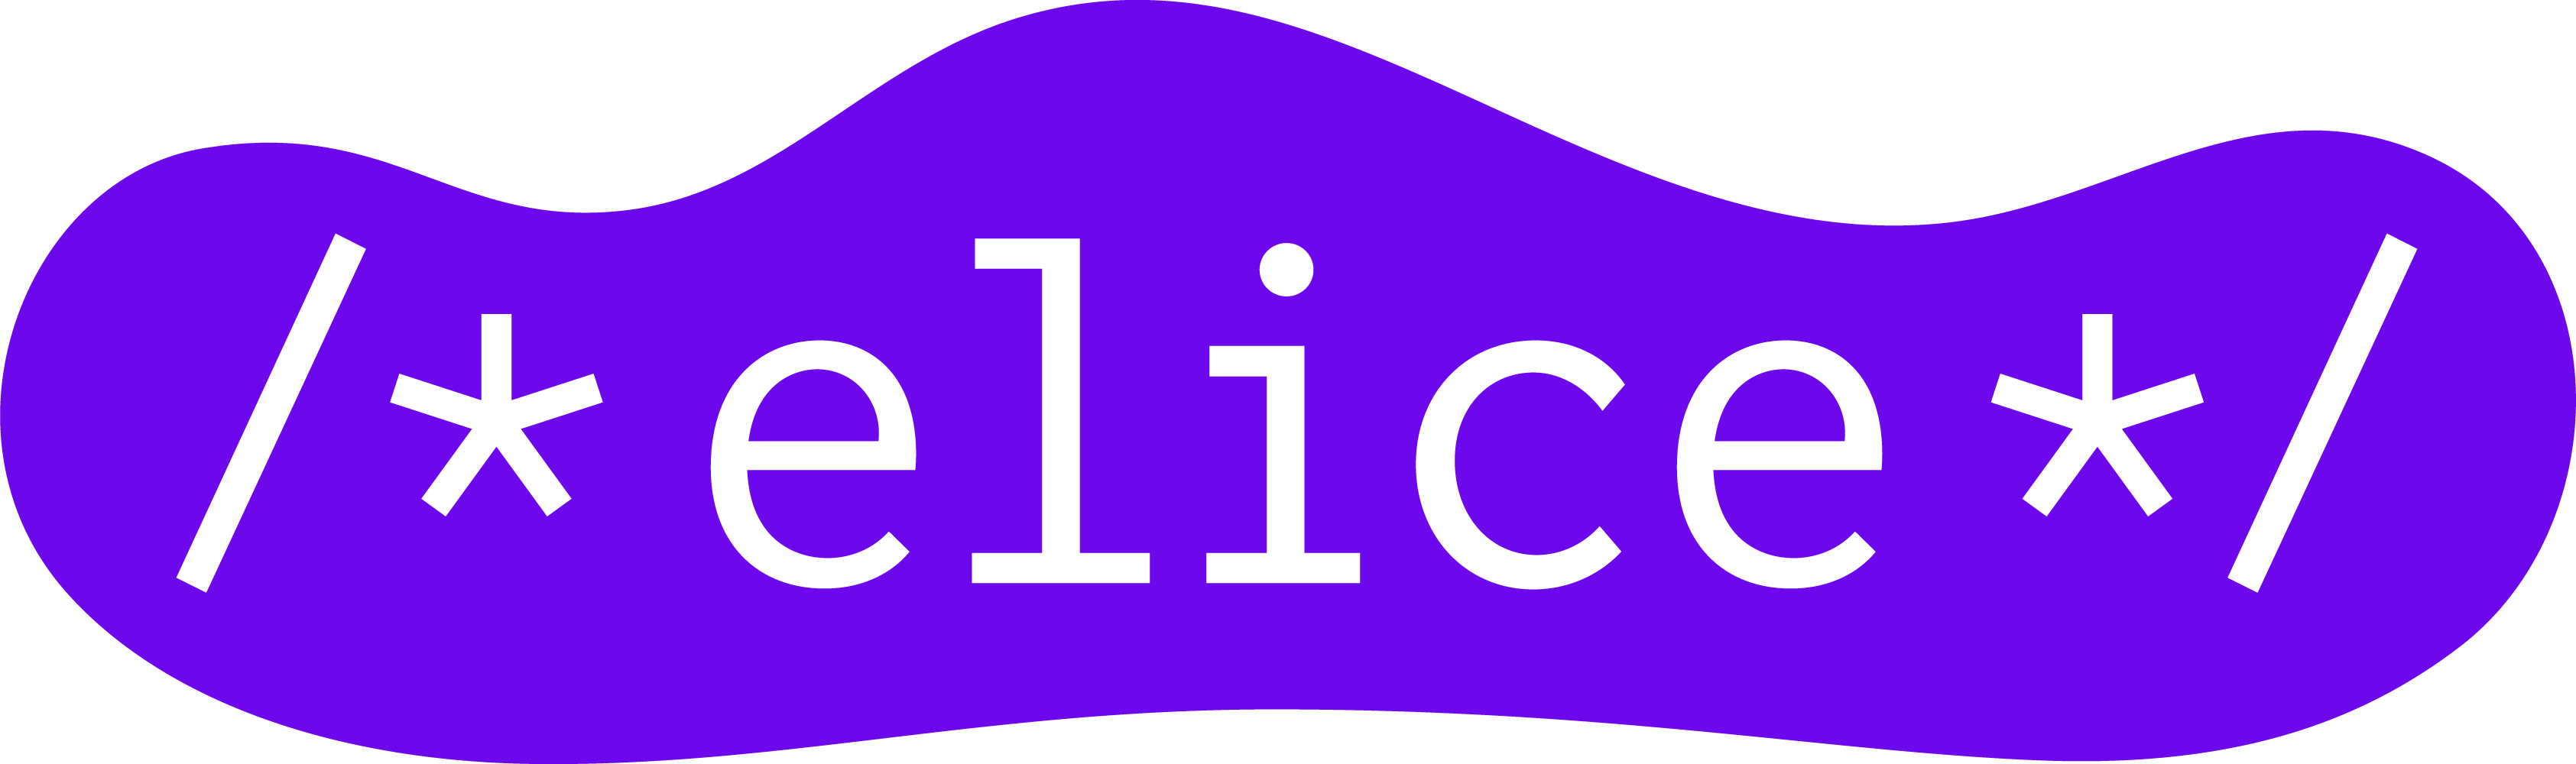 sponsor elice